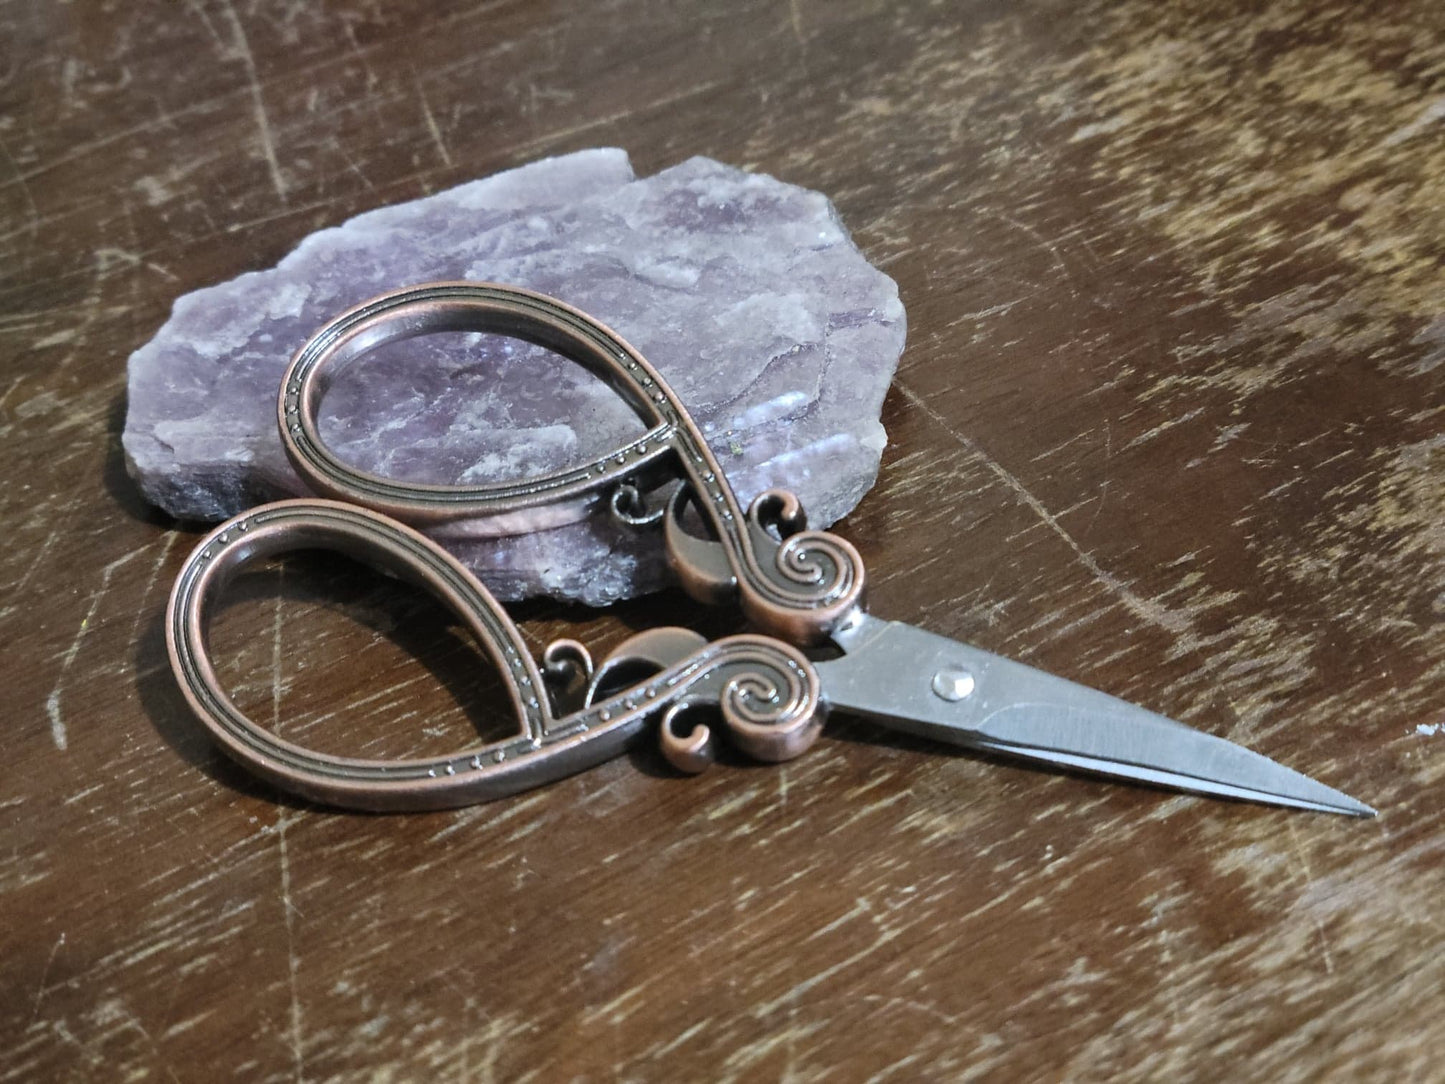 Vintage-Inspired Scissors